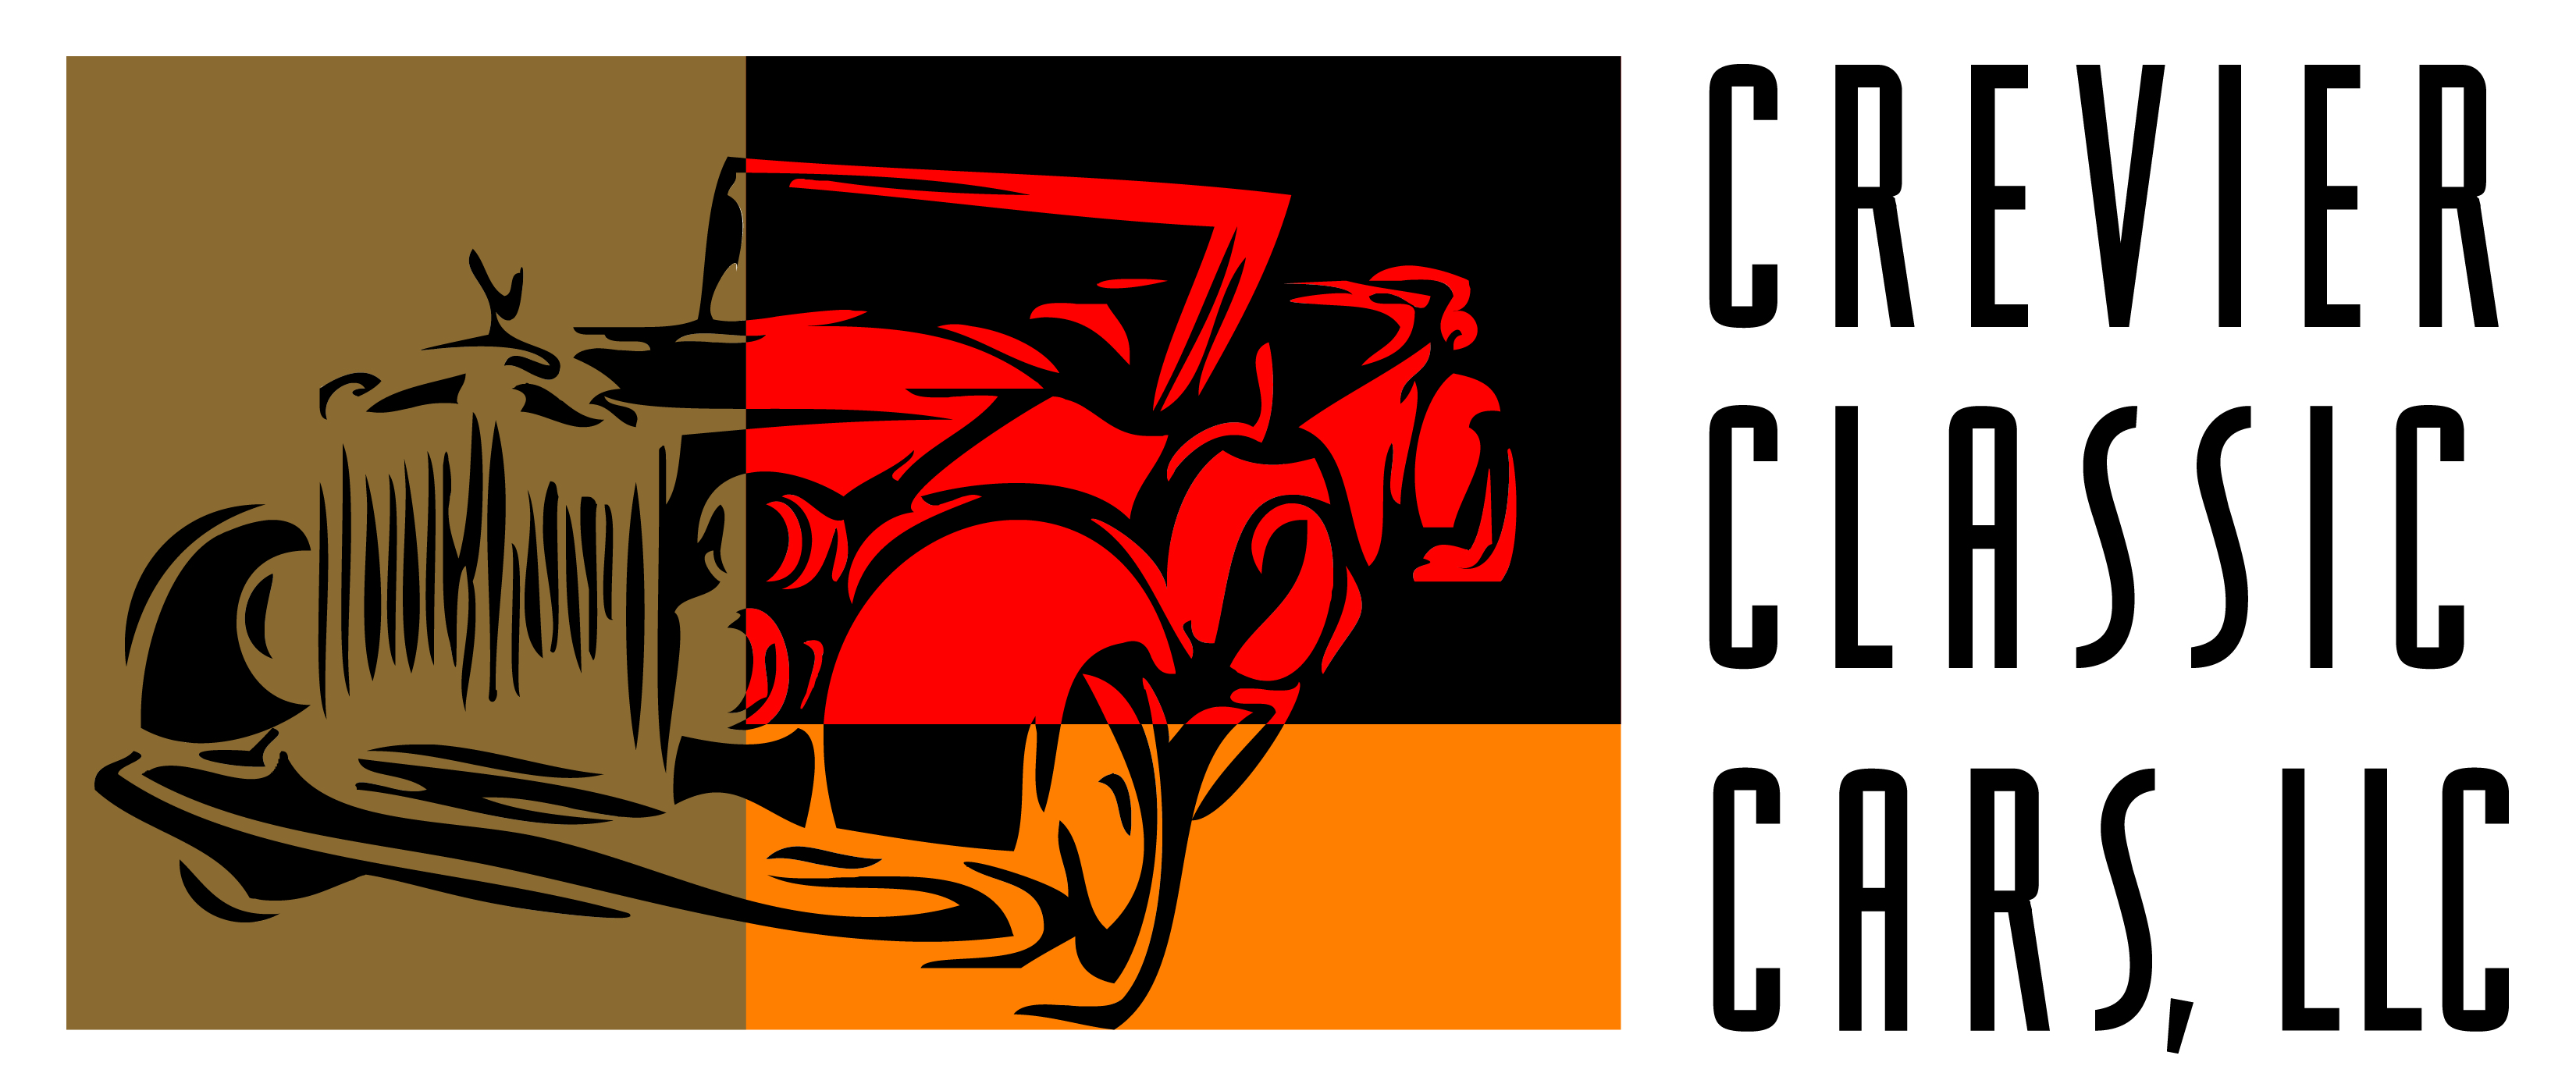 CrevCC_4c High Resolution logo.jpg